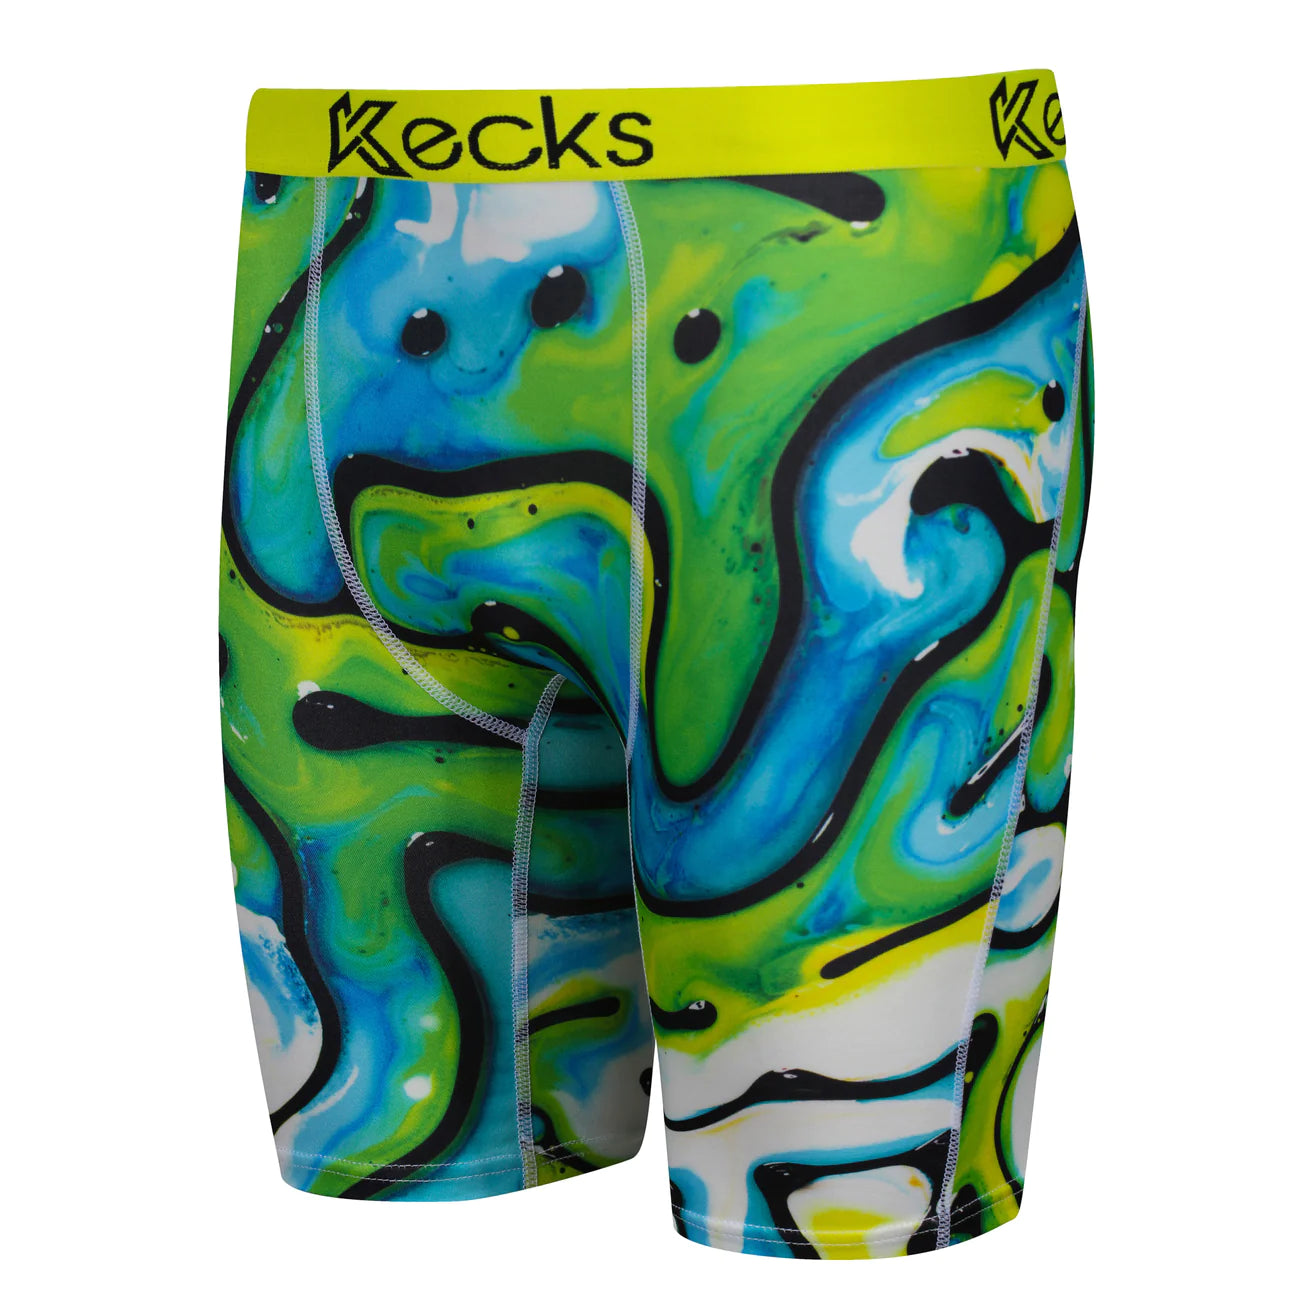 Kecks Cupcakes Print Boxer Shorts Underwear Boxer Shorts